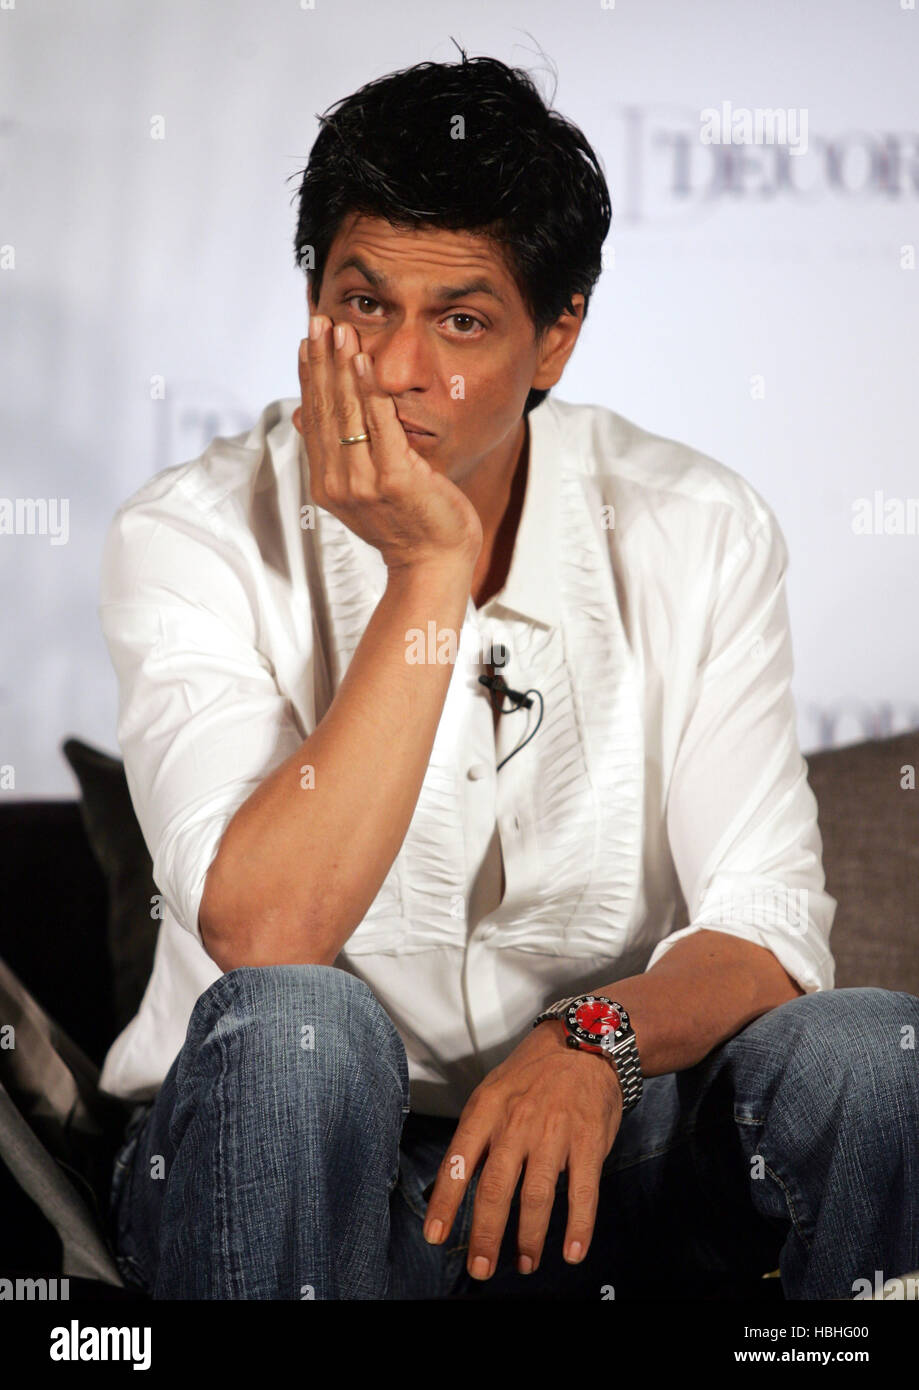 Shahrukh Khan, Shah Rukh Khan, SRK, Indian actor, film producer, television personality, Baadshah of Bollywood, King of Bollywood, King Khan, brand ambassador, Decor launch, Mumbai, India, Asia Stock Photo